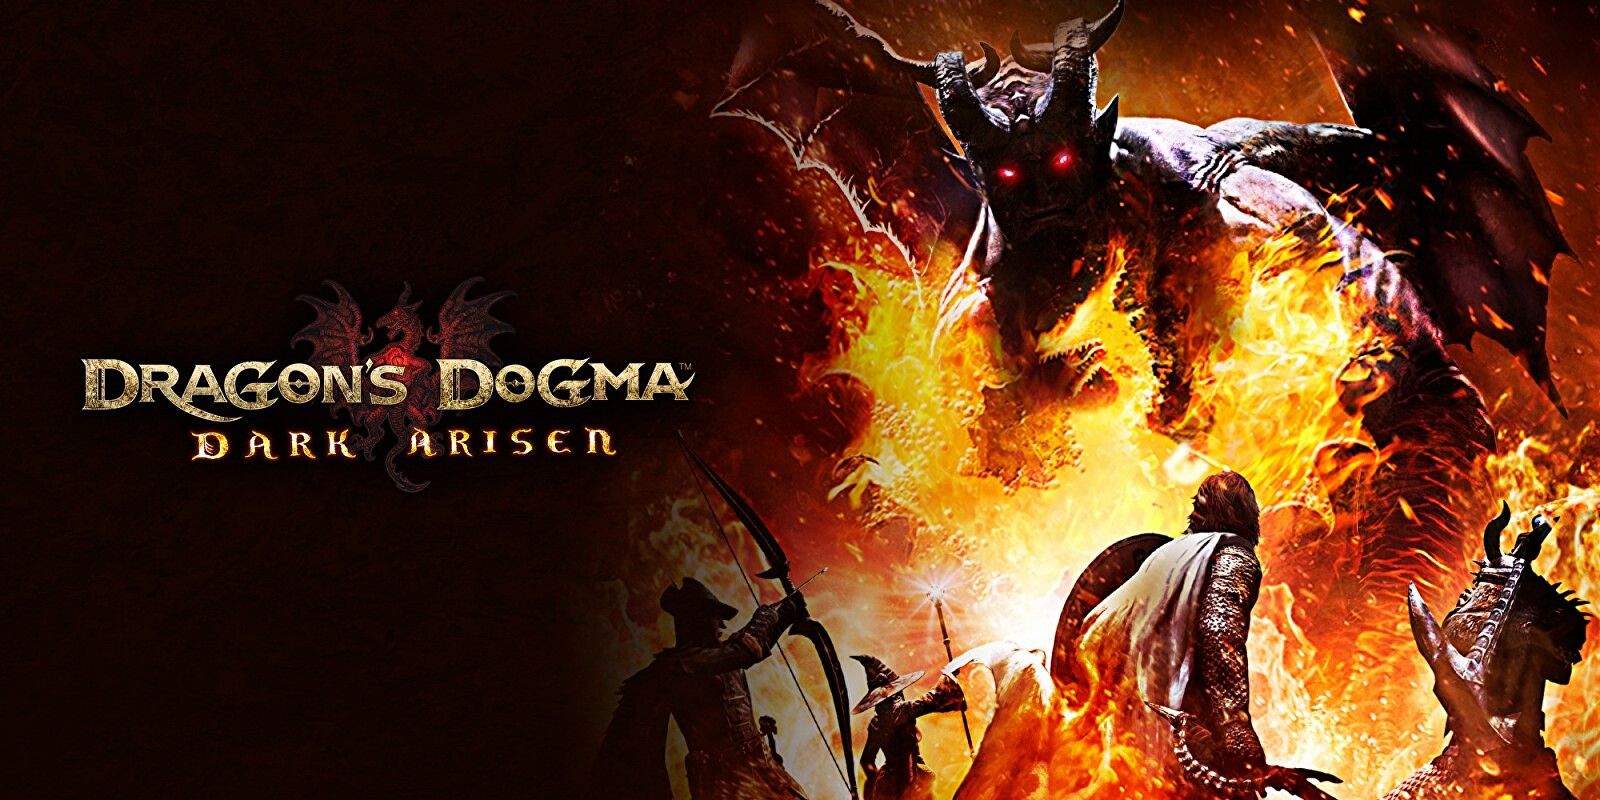 This is Dragon's Dogma Dark Arisen's title card.